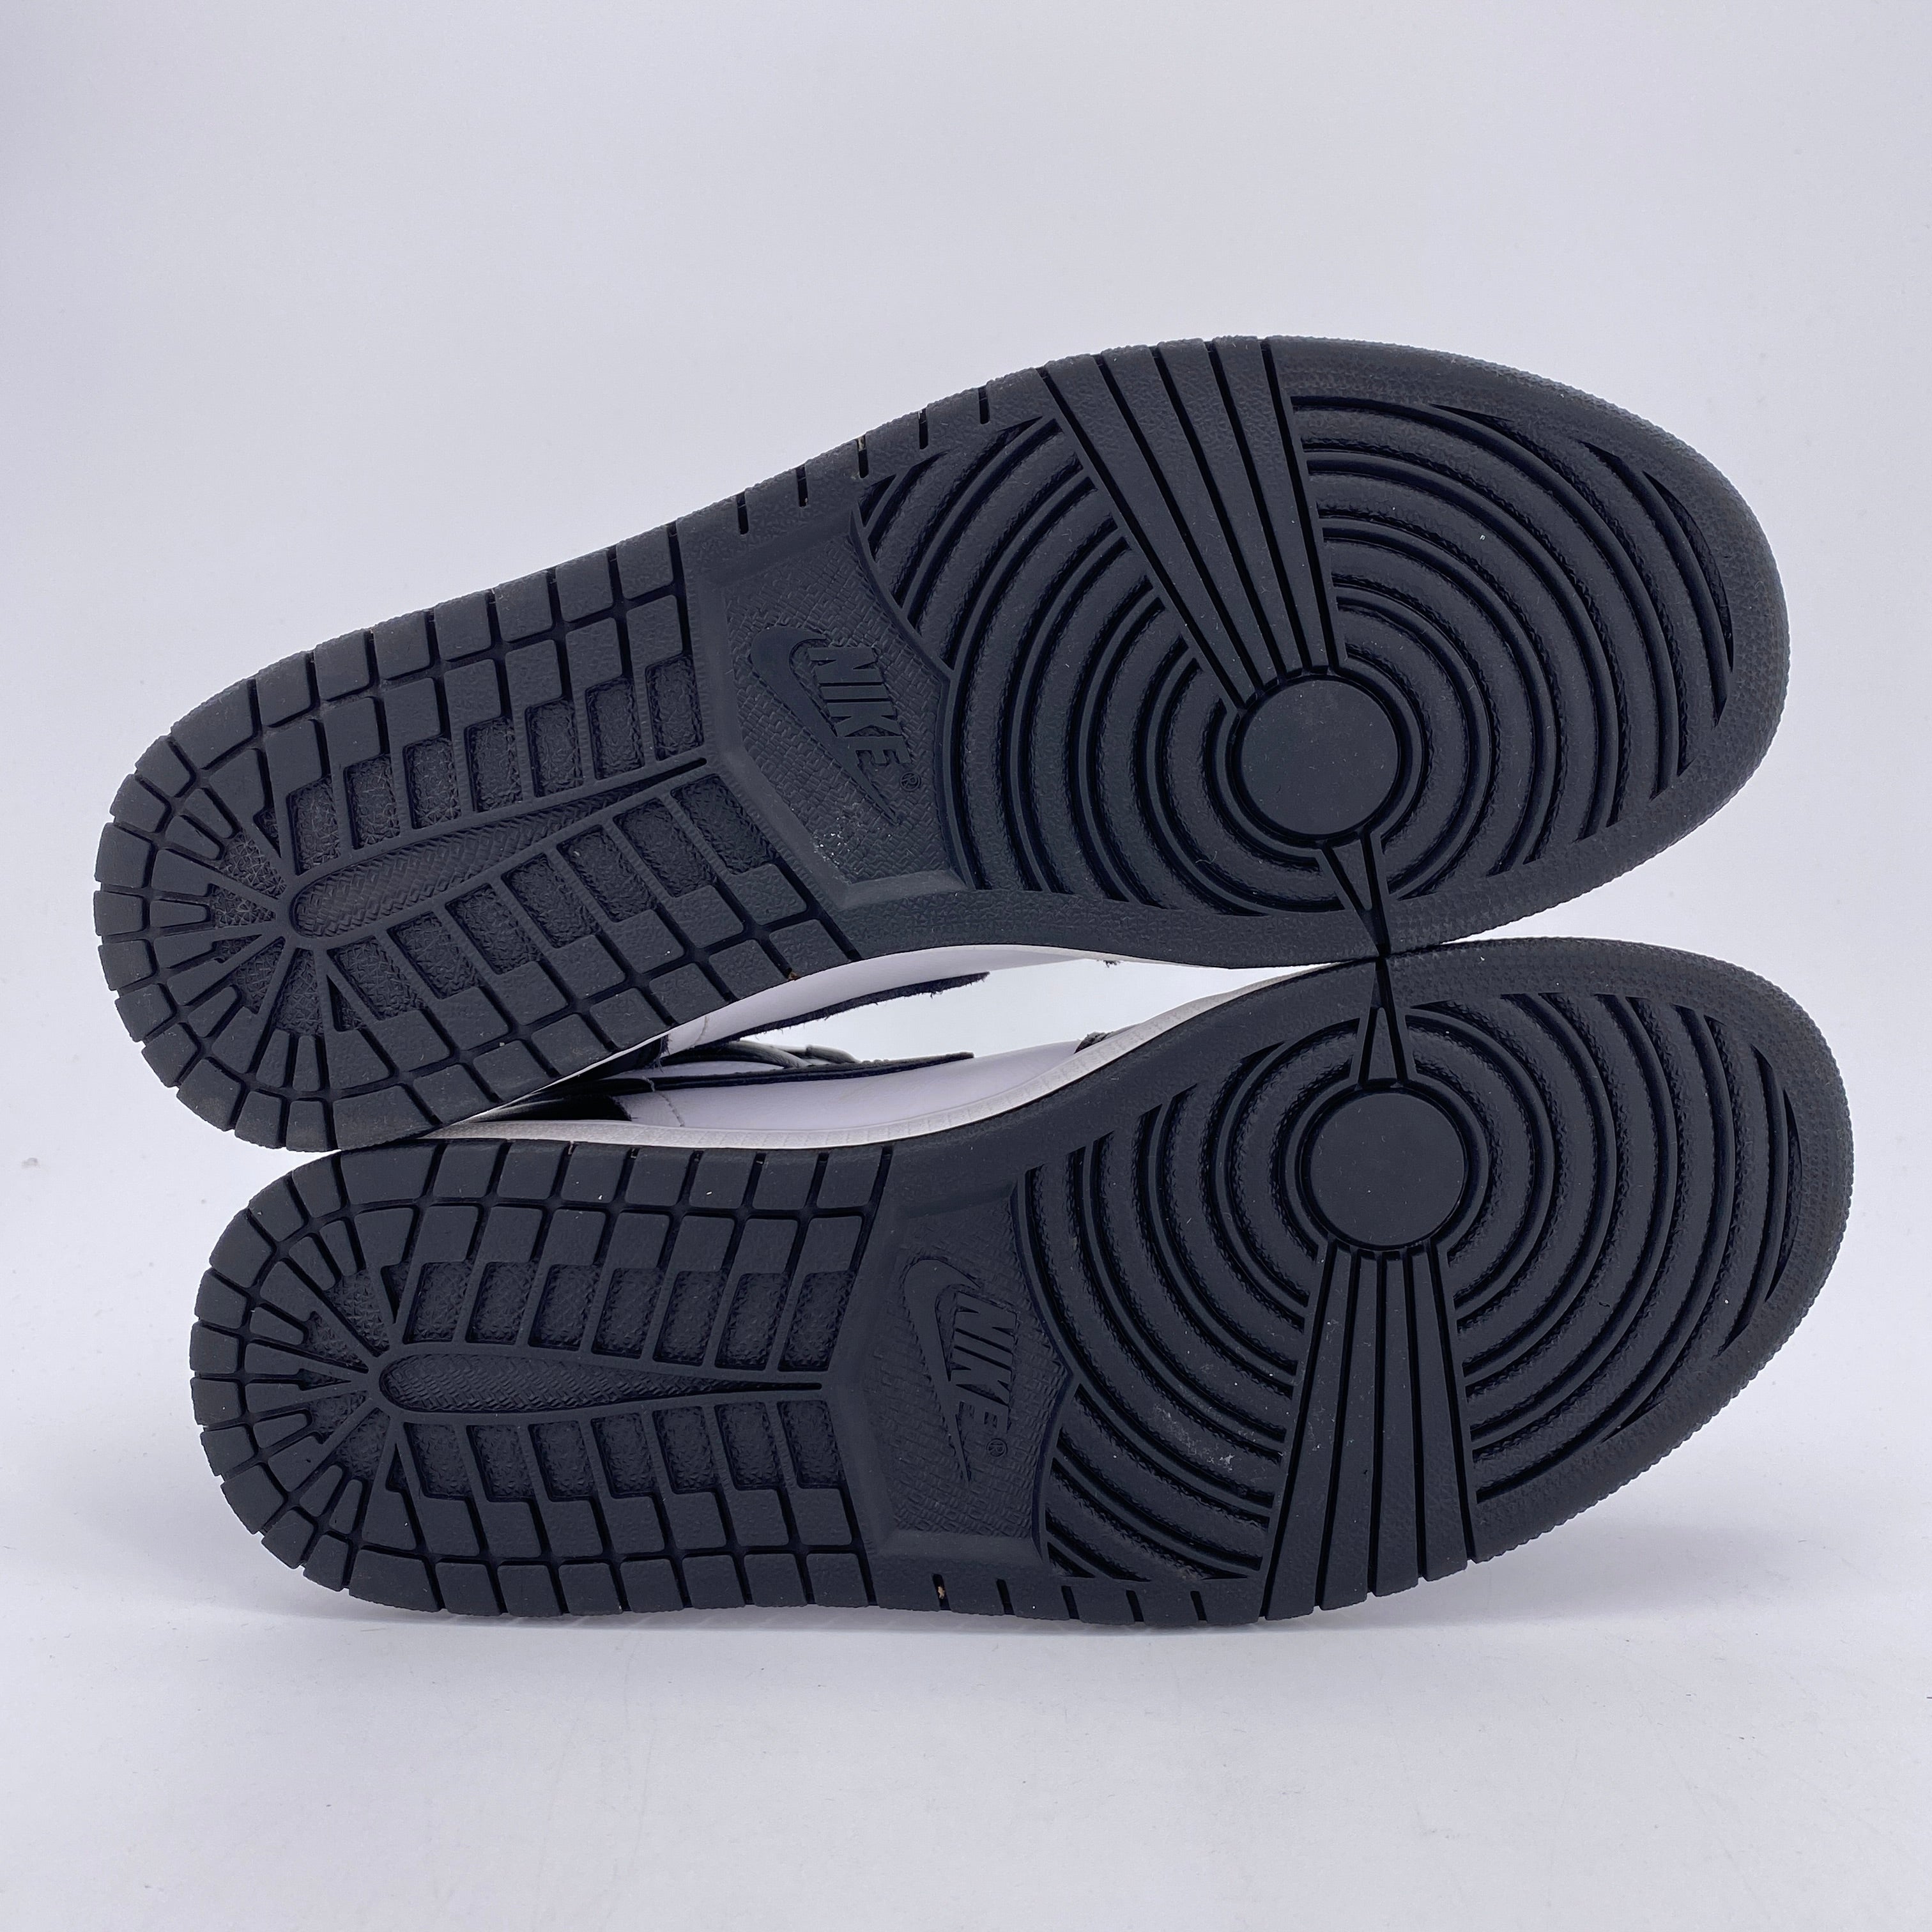 Air Jordan 1 Retro High OG &quot;Black White&quot; 2014 Used Size 10